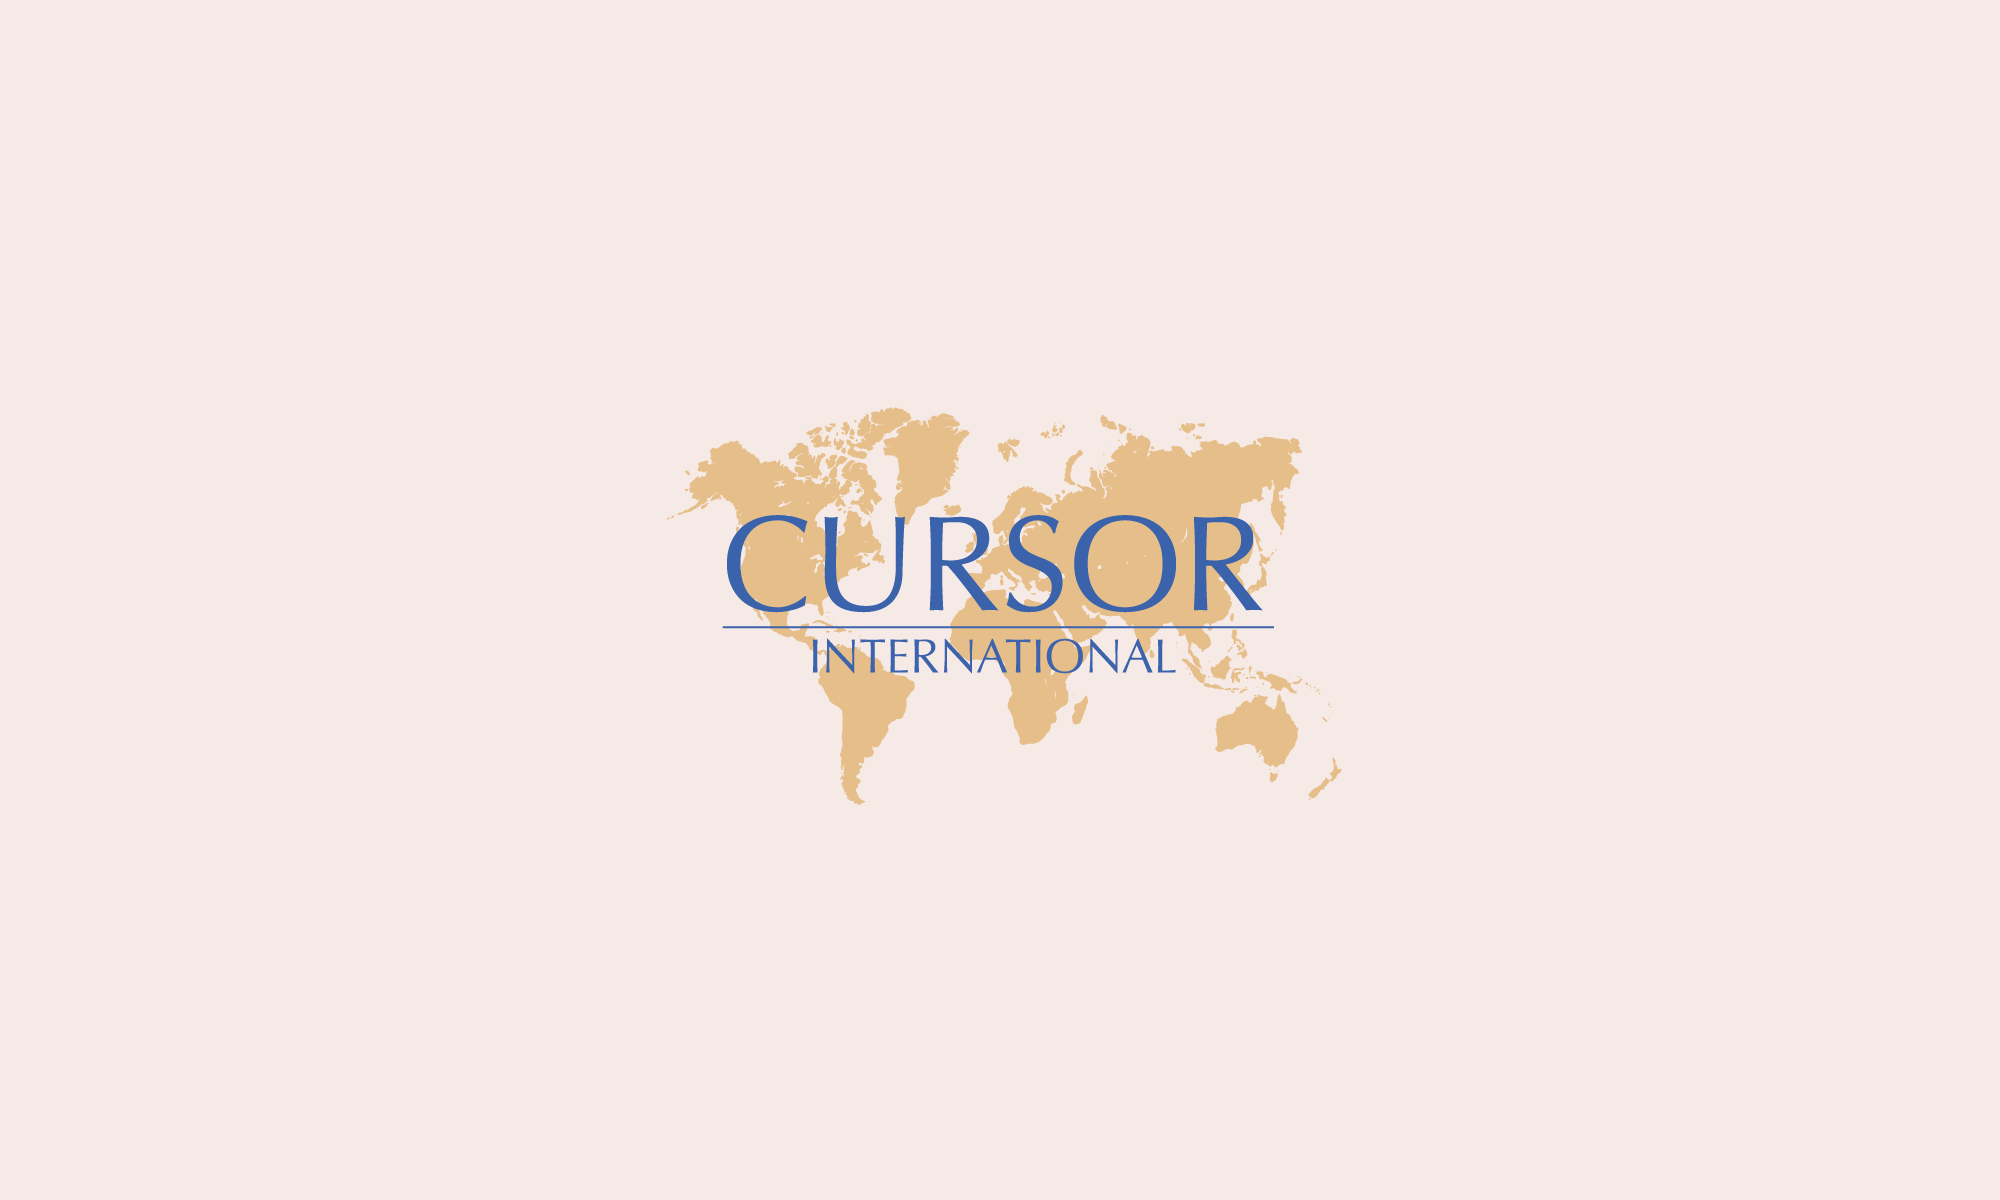 Cursor international